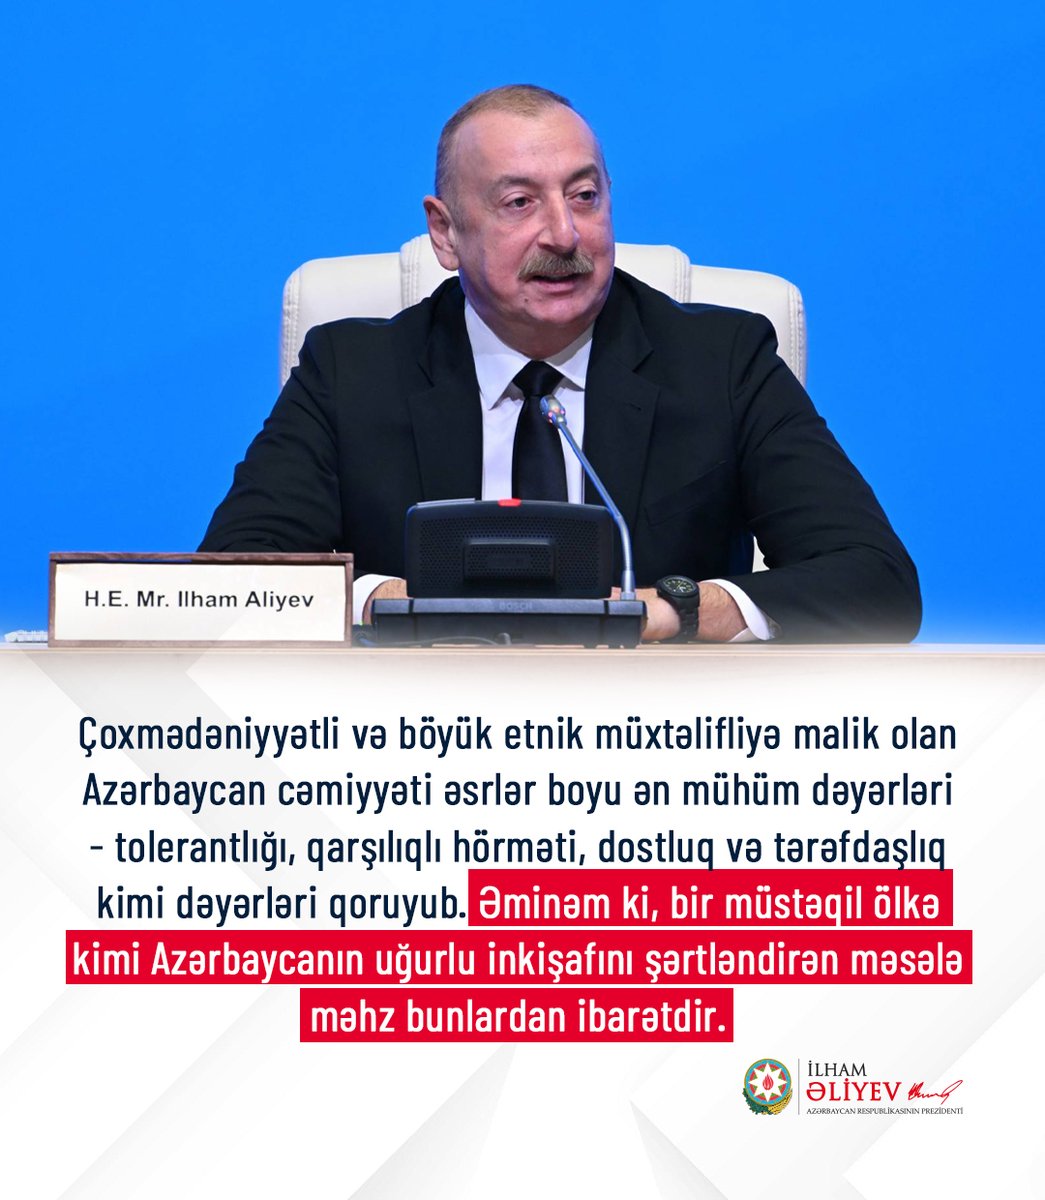 İlham Əliyev (@azpresident) on Twitter photo 2024-05-01 20:18:30